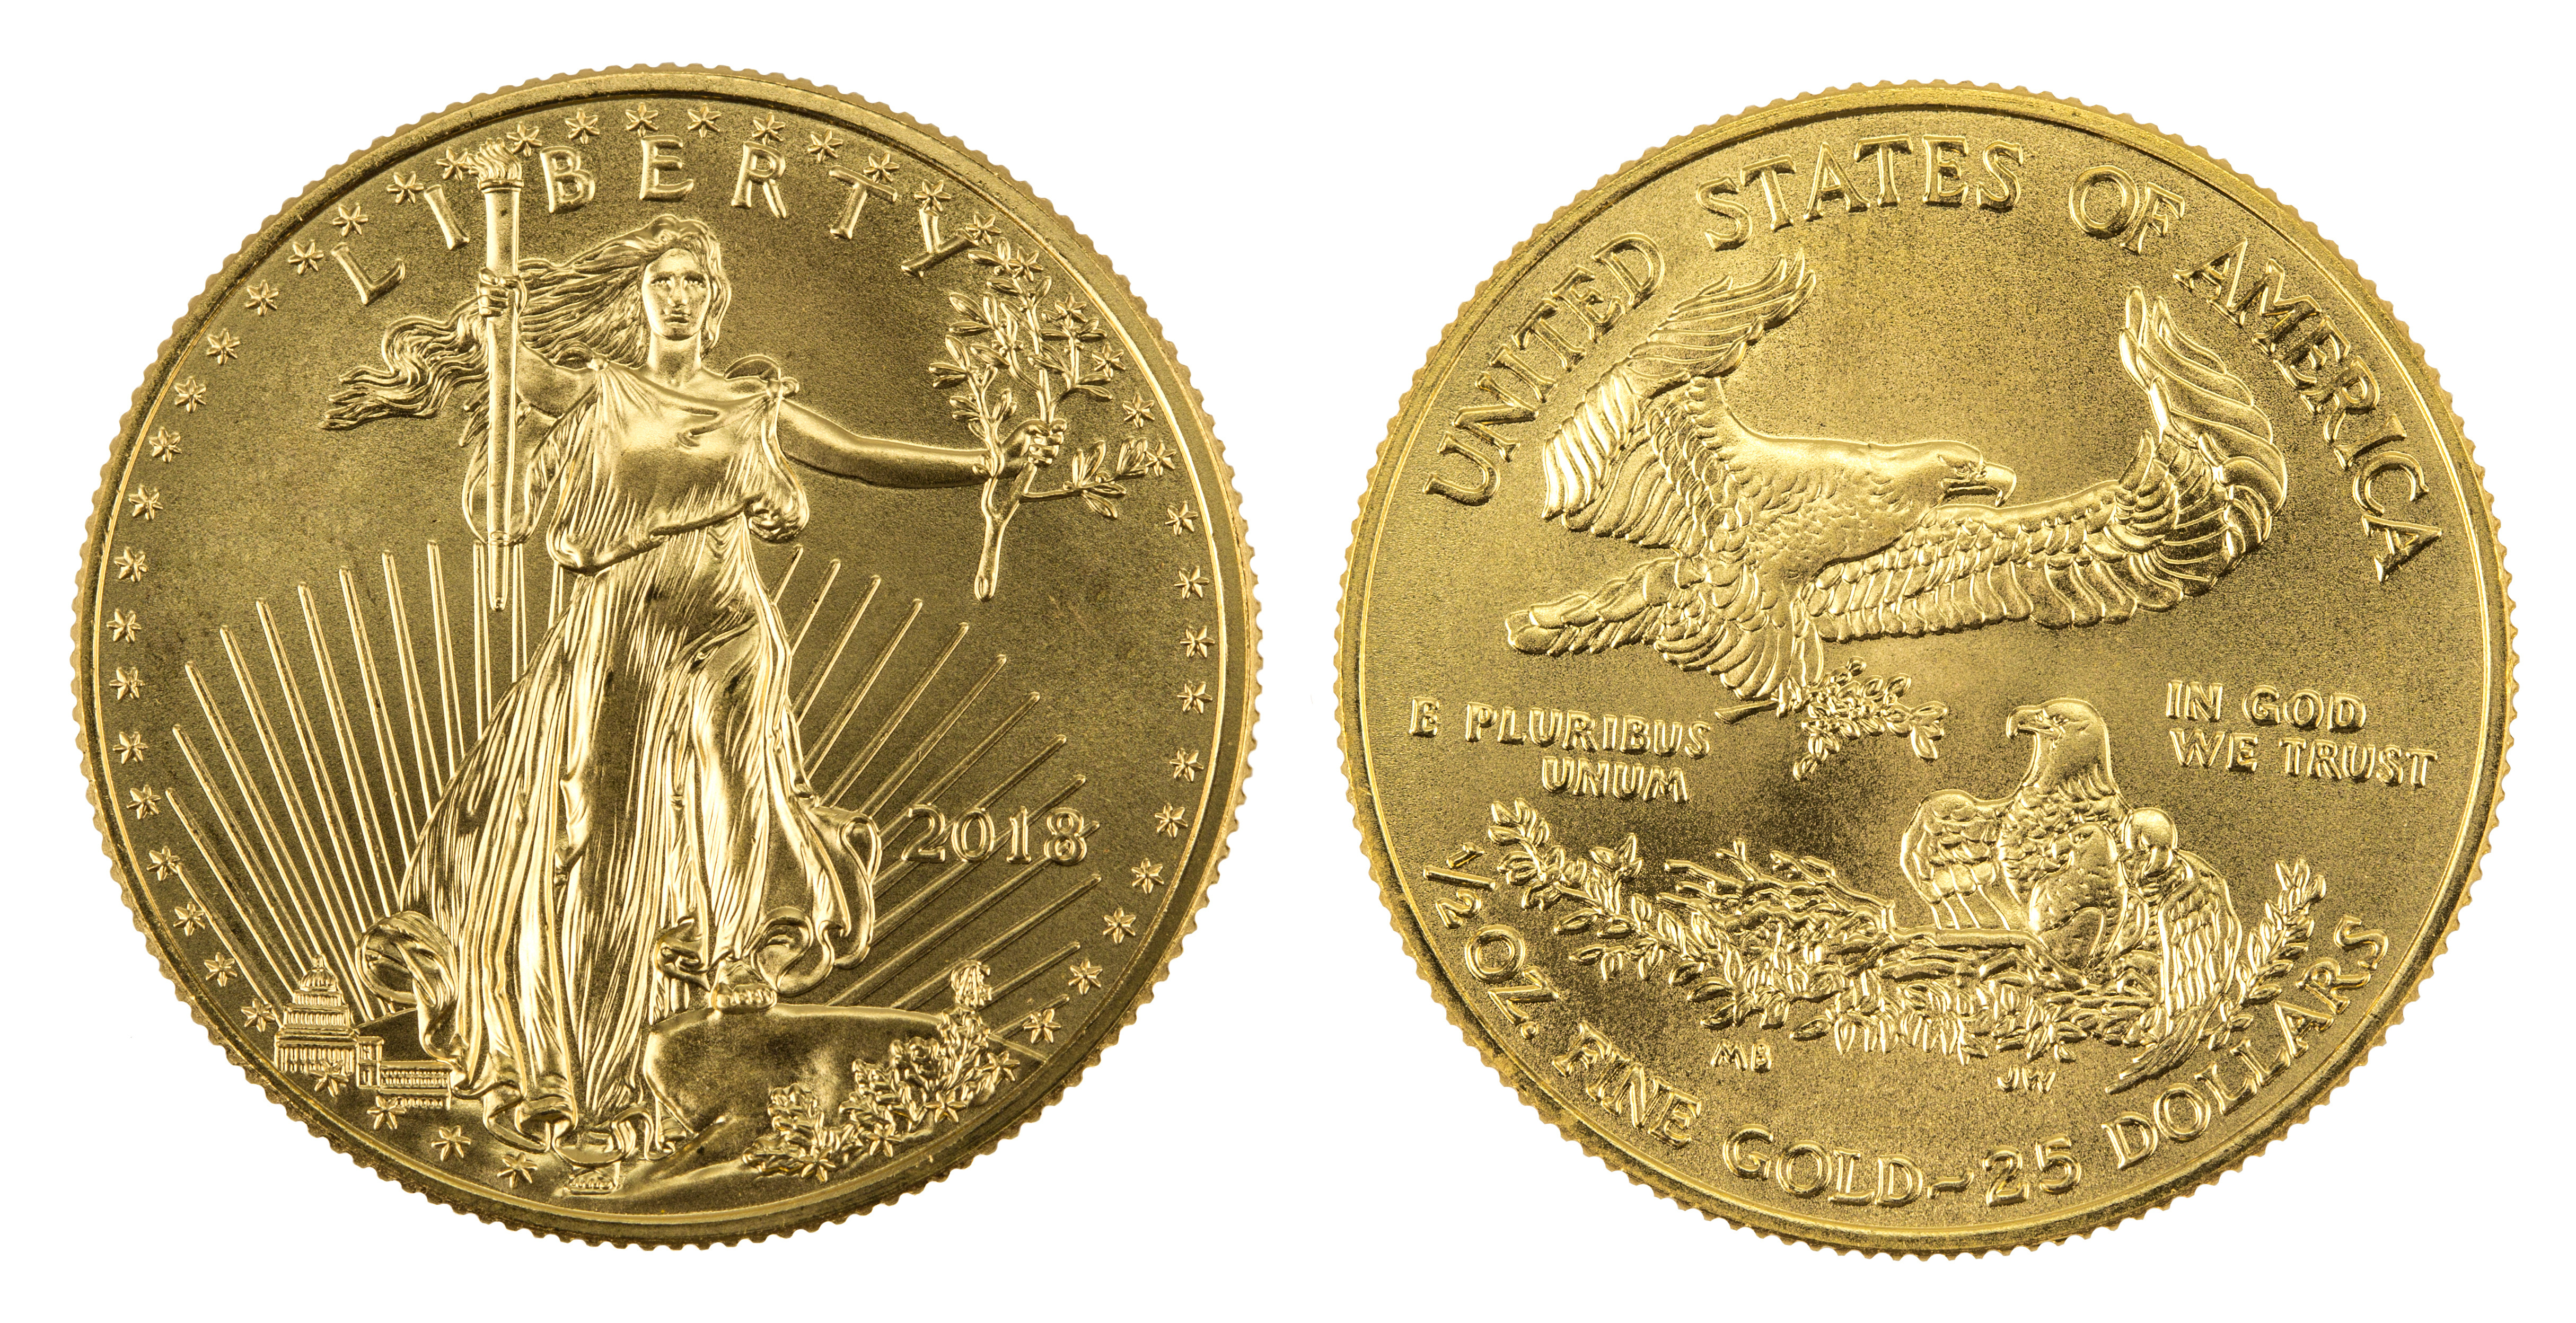 1 Ounce Gold American Eagle